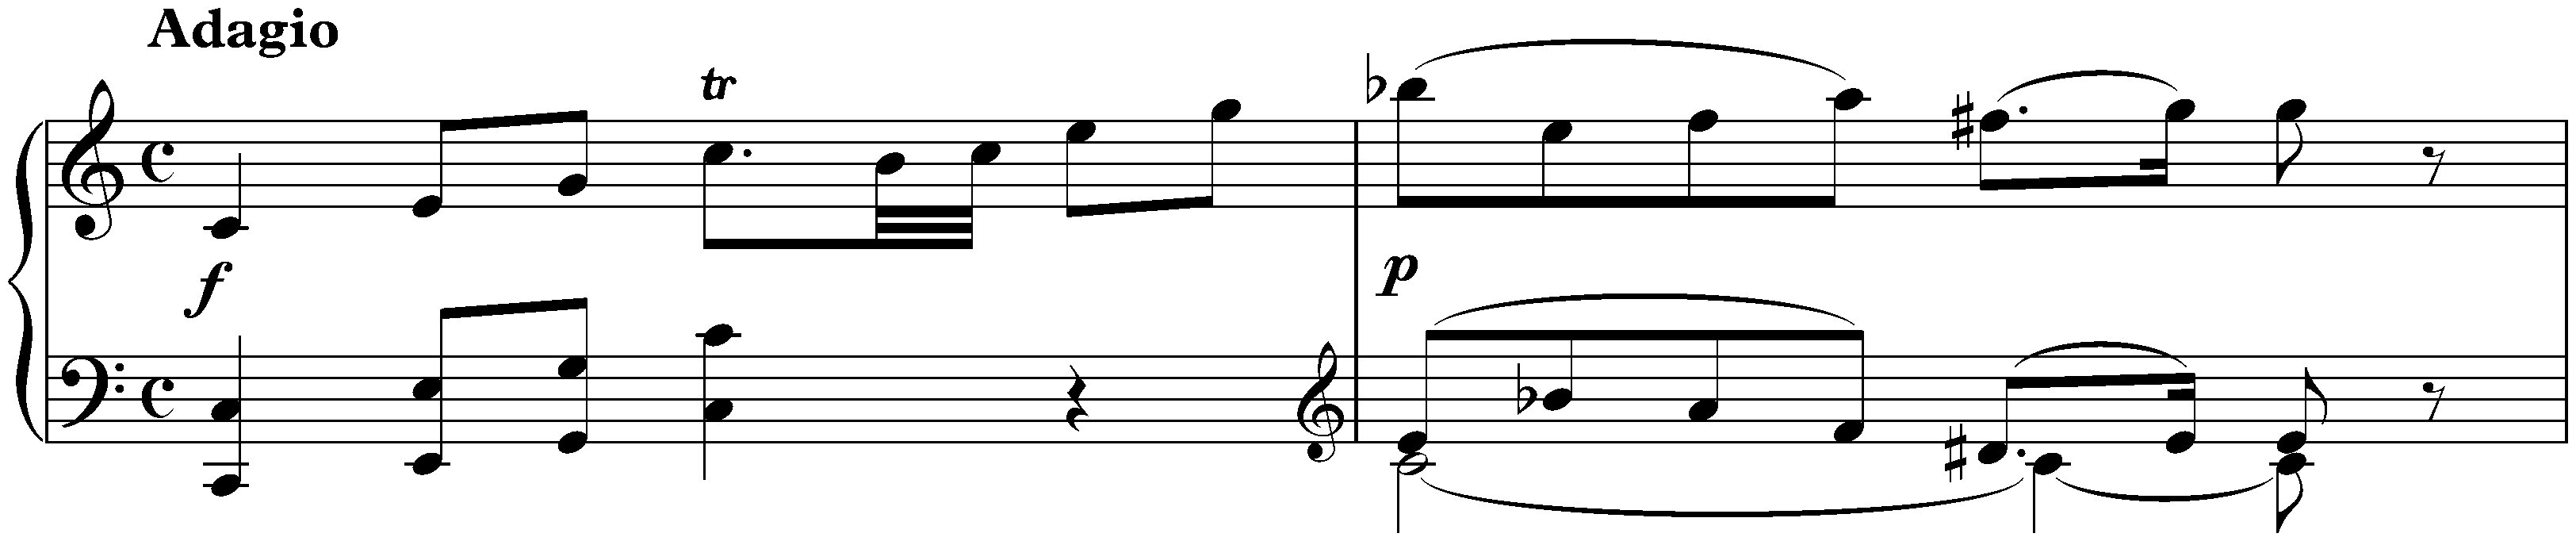 Prelude (Fantasie) and Fugue in C major, KV 394/383a; 1. Prelude (Fantasie)